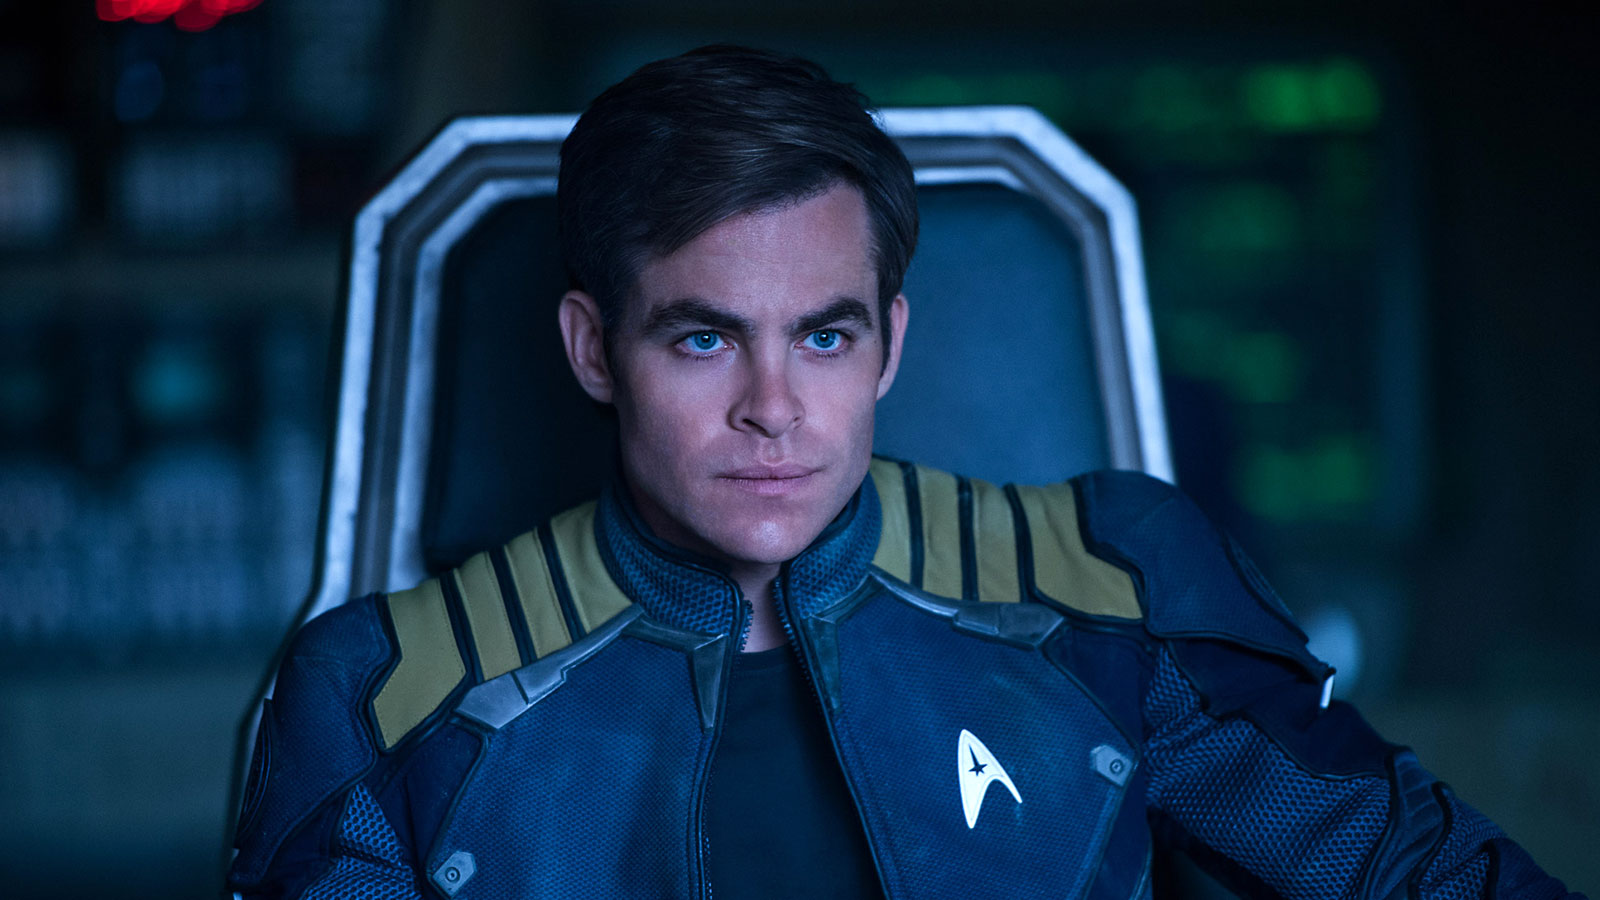 Paramount announces new Star Trek film featuring Chris Pine and crew, set for 2023